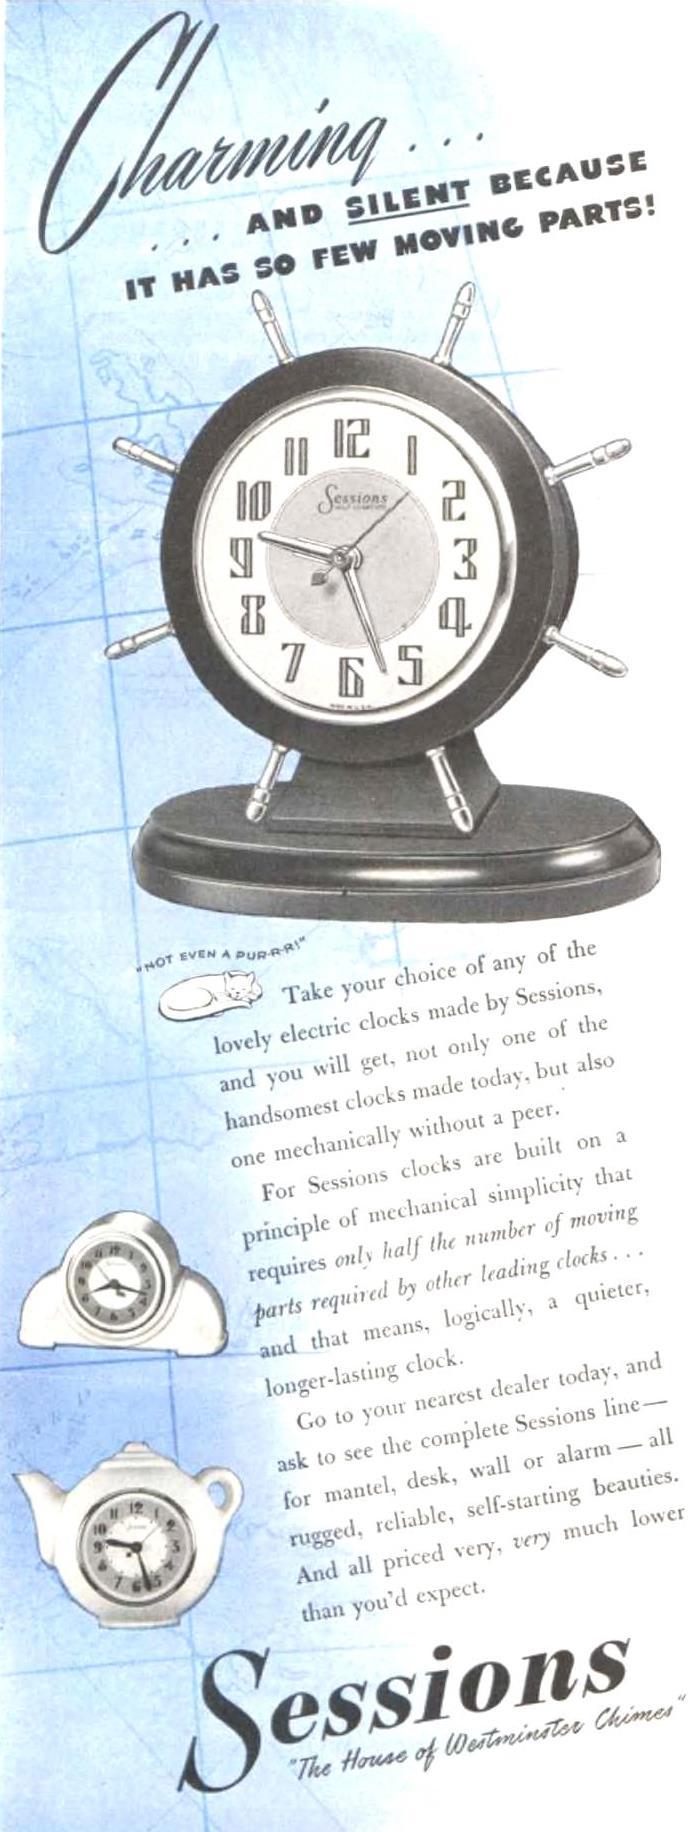 Sessions Clocks 1946 0.jpg